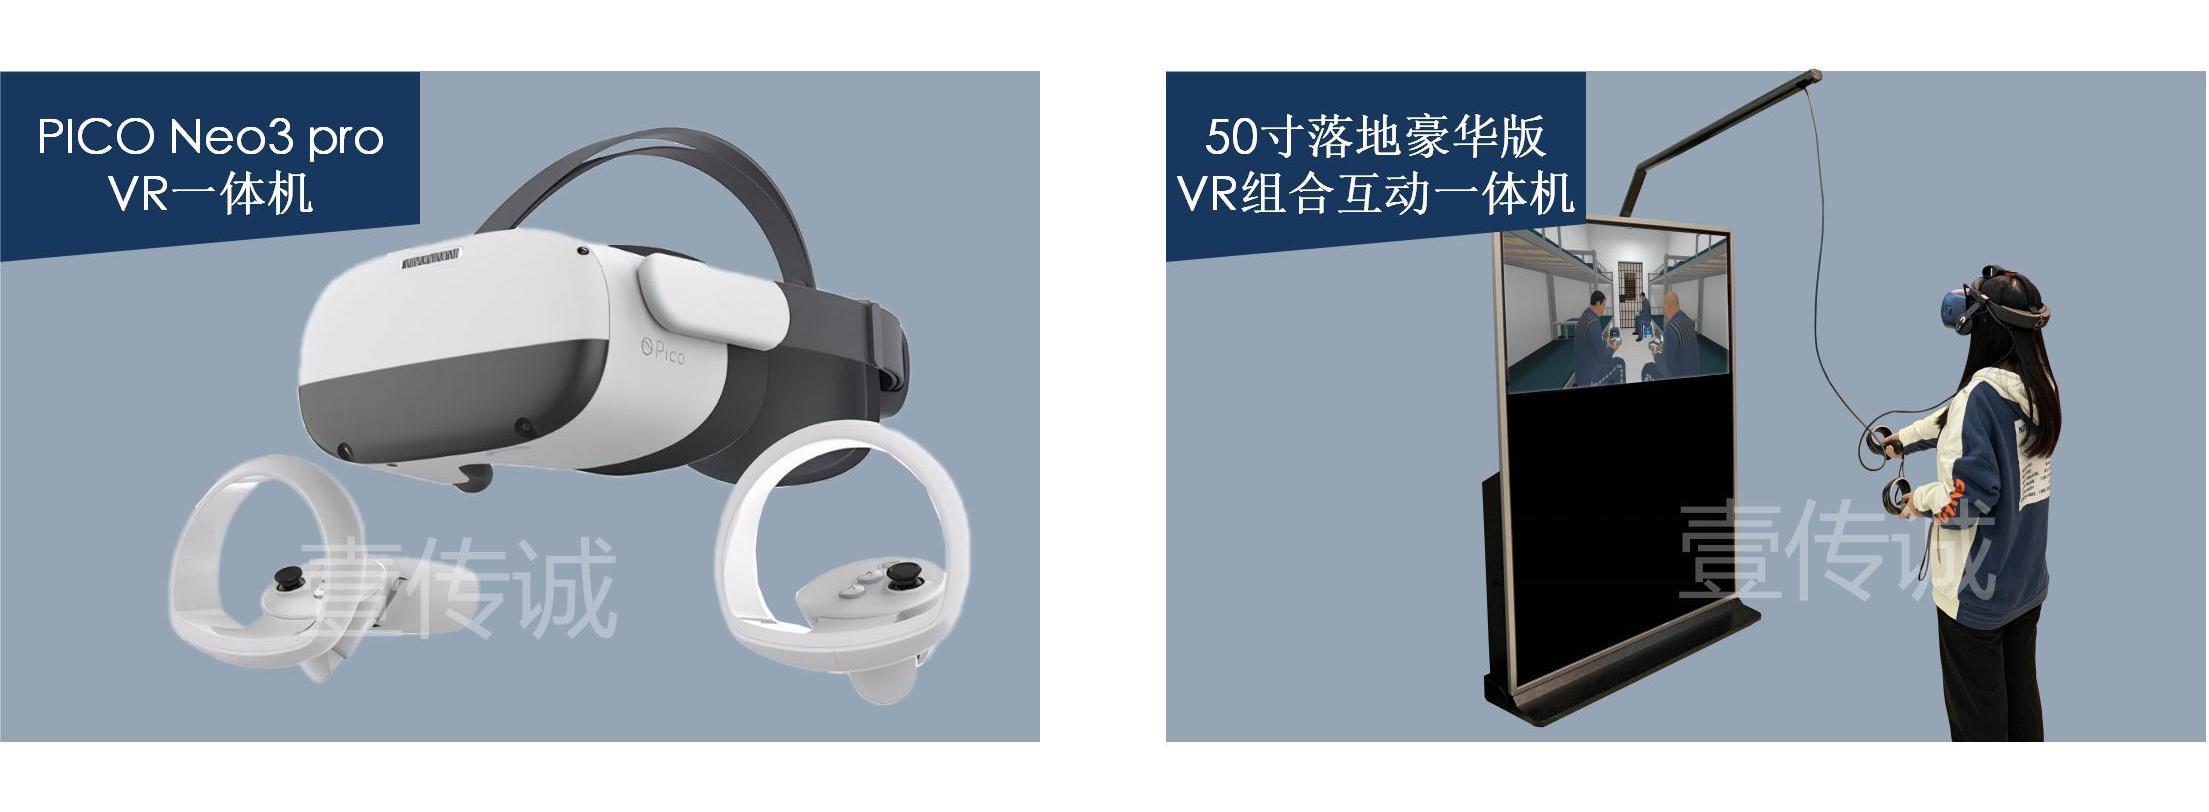 VR防性侵害体验设备